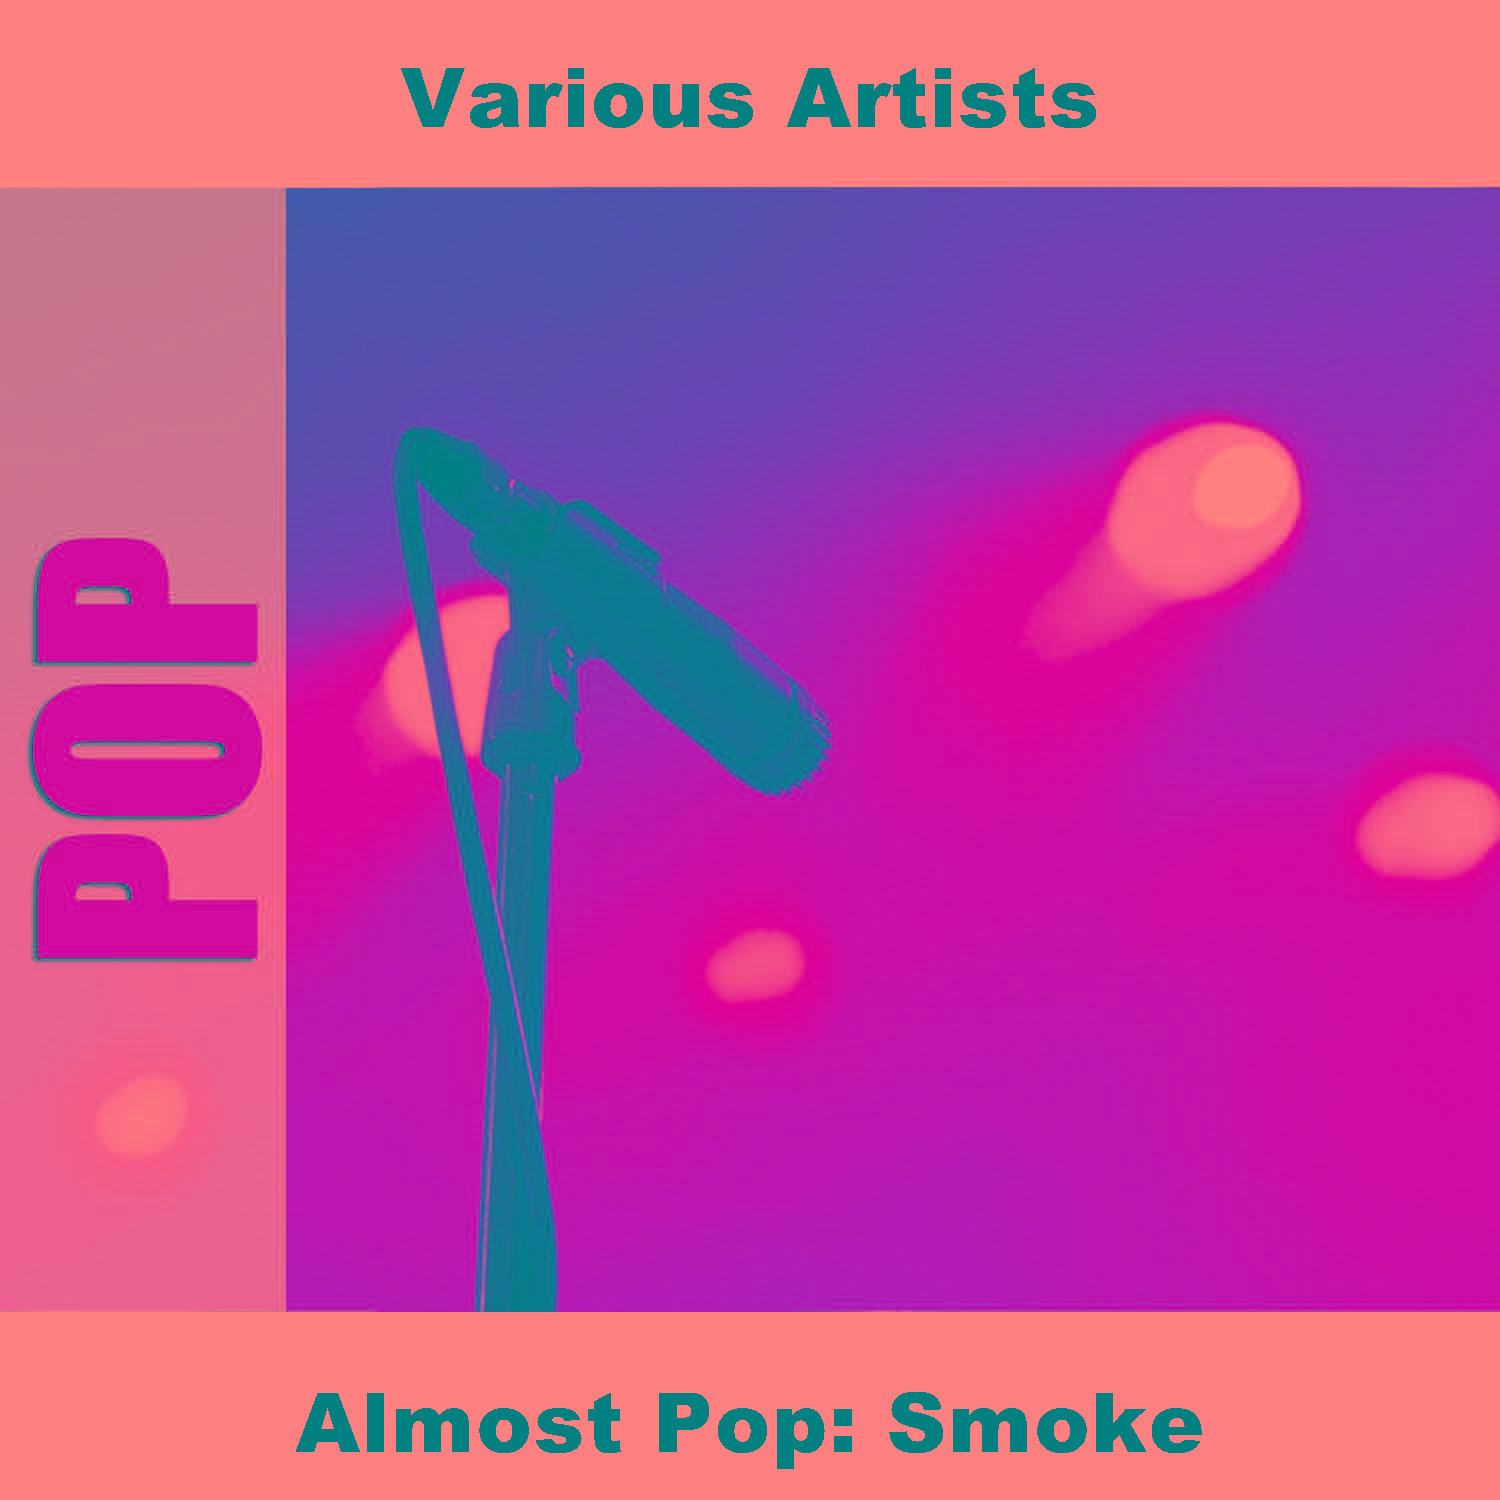 Almost Pop: Smoke